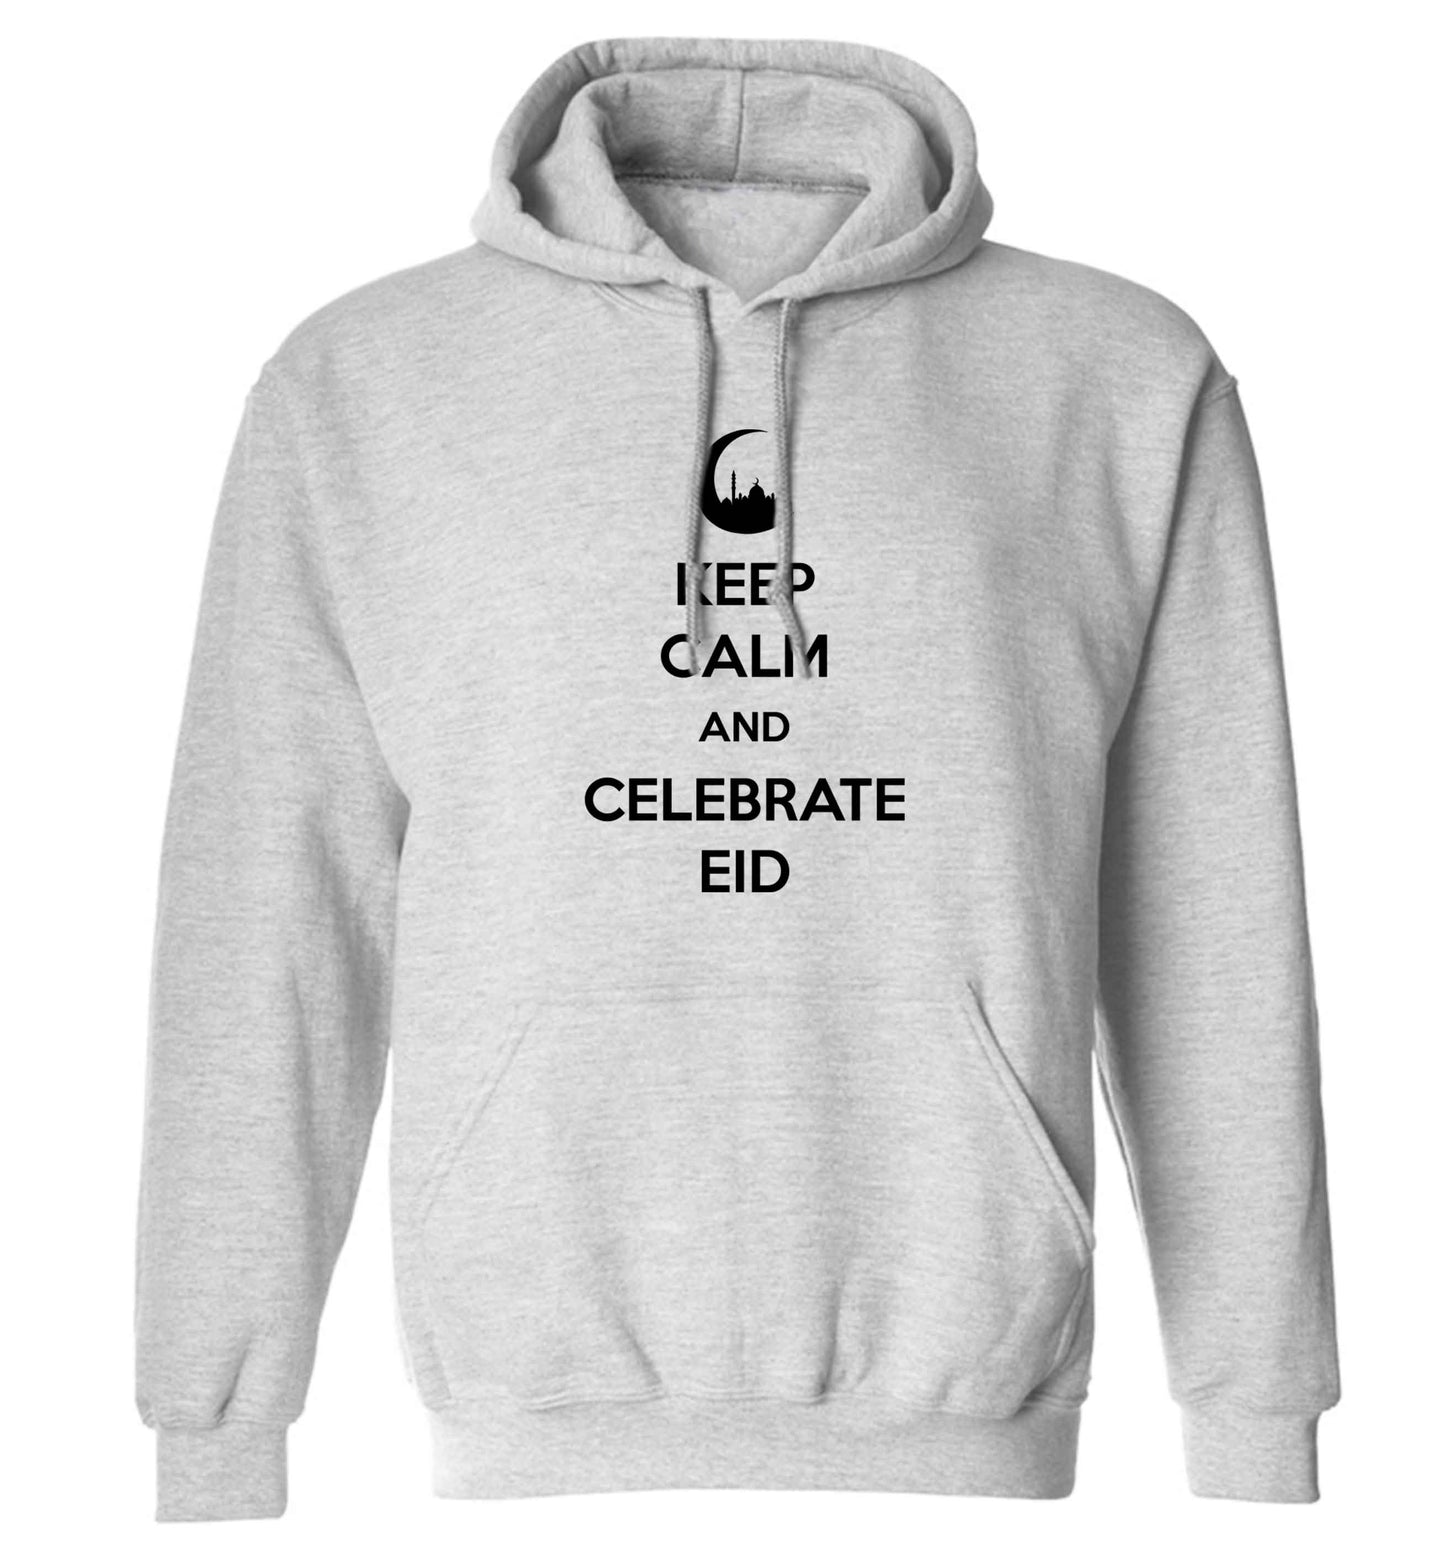 Keep calm and celebrate Eid adults unisex grey hoodie 2XL